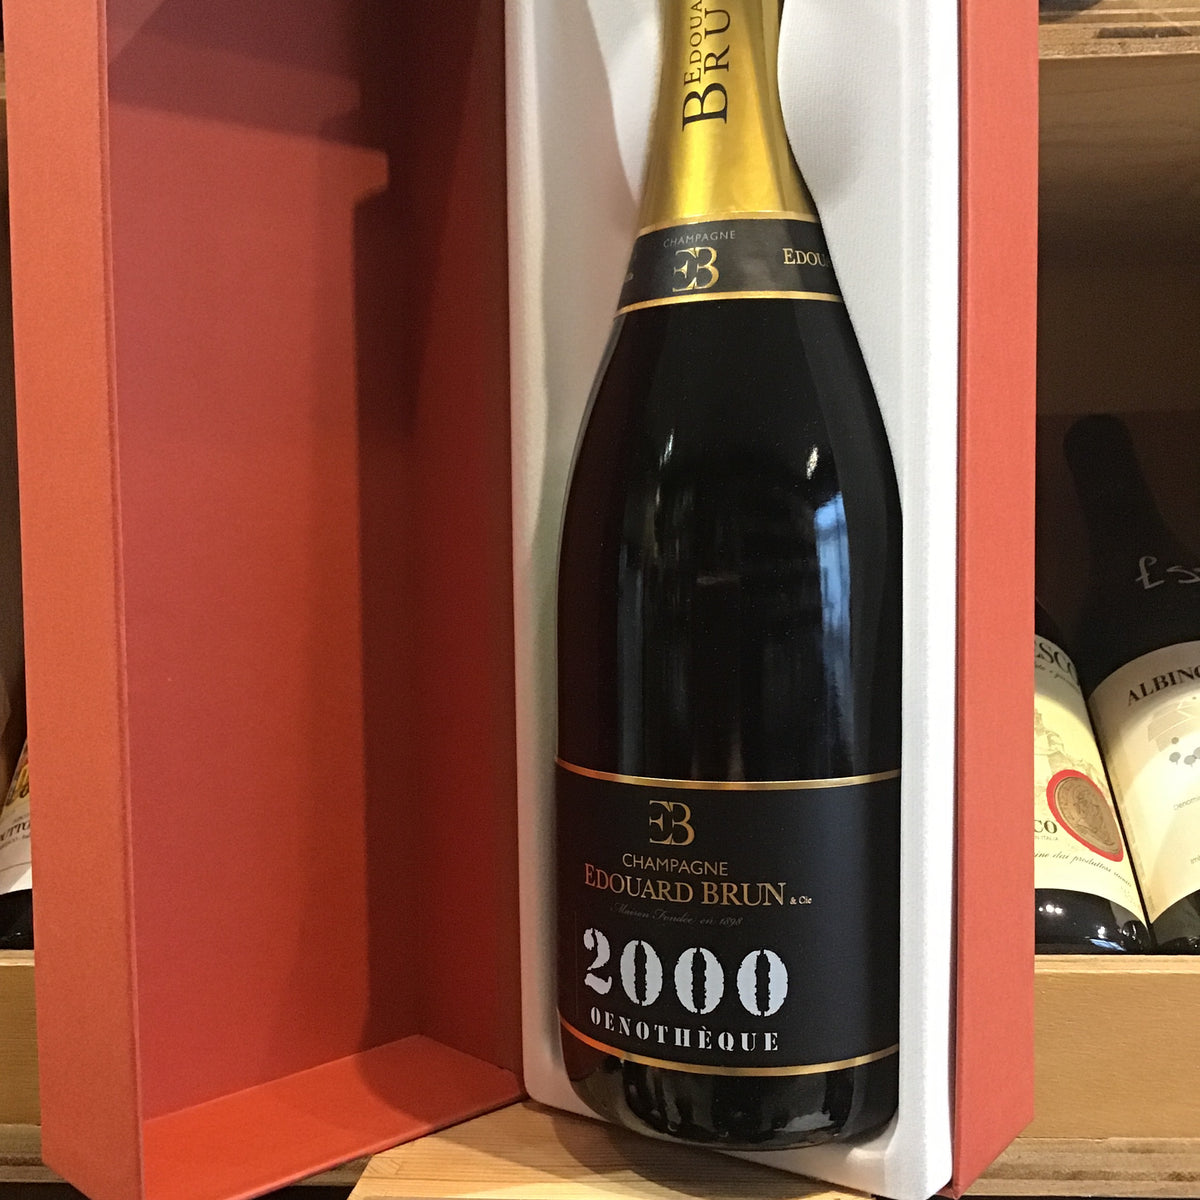 Edouard Brun Vintage Brut Champagne 2000 Oenotheque - Butlers Wine Cellar Brighton